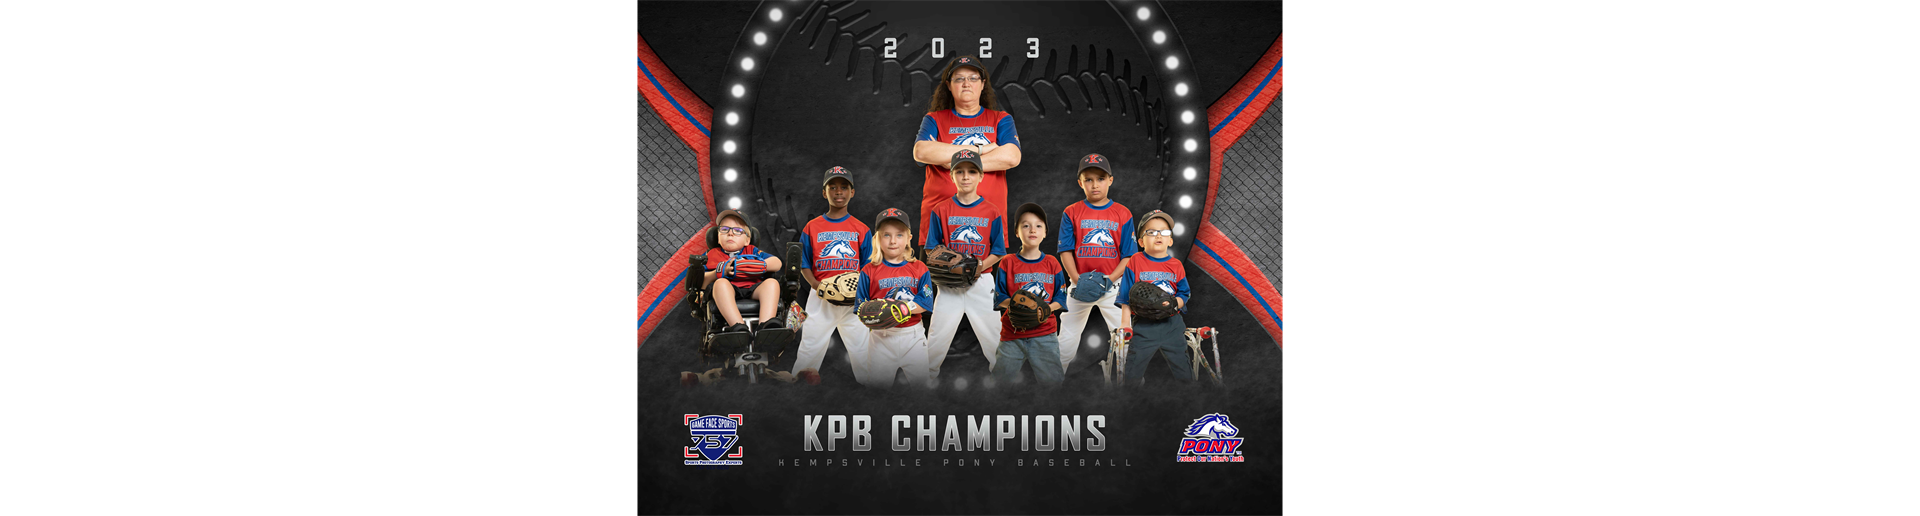 KPB Champions Team